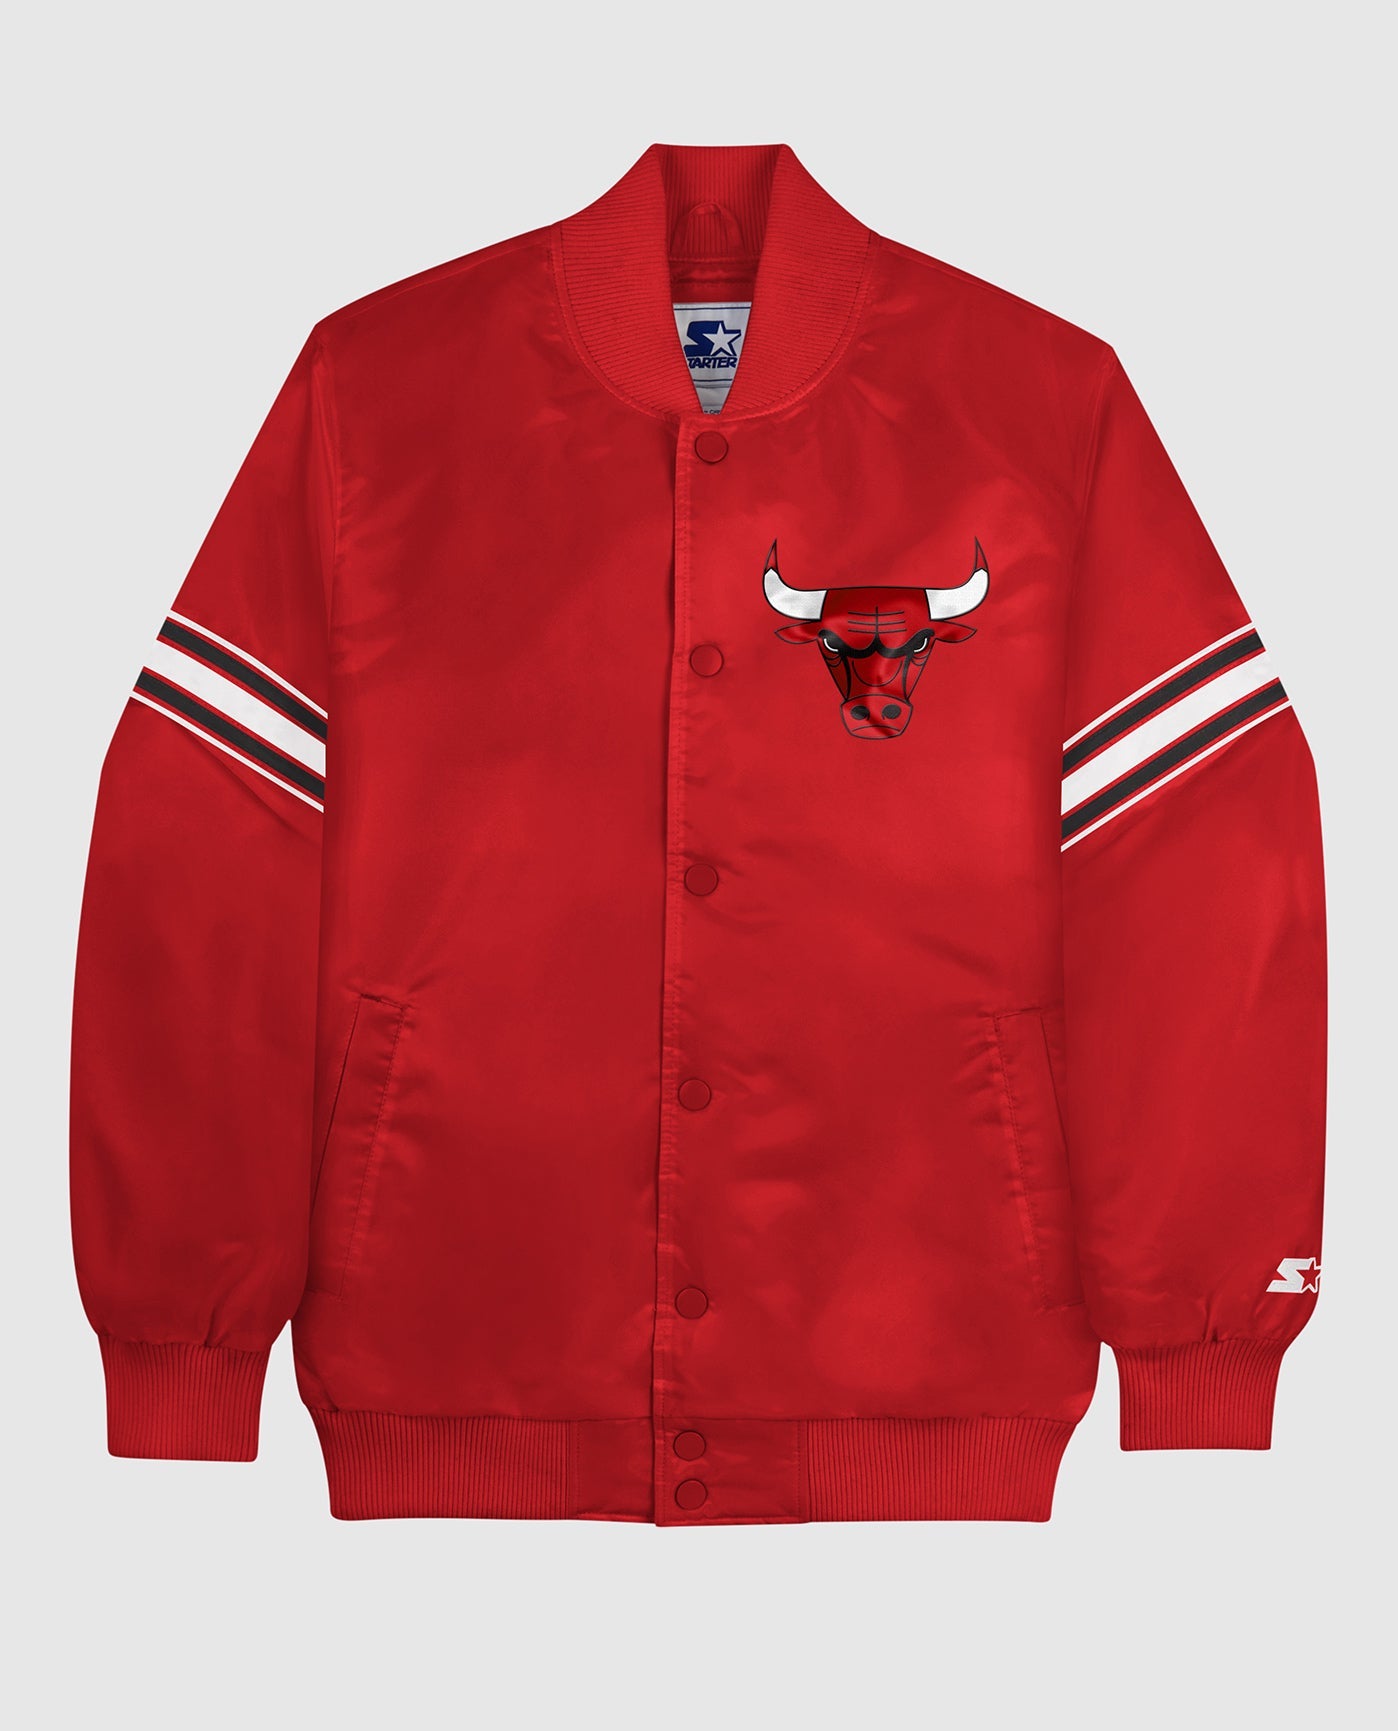 Chicago Bulls Jacket 